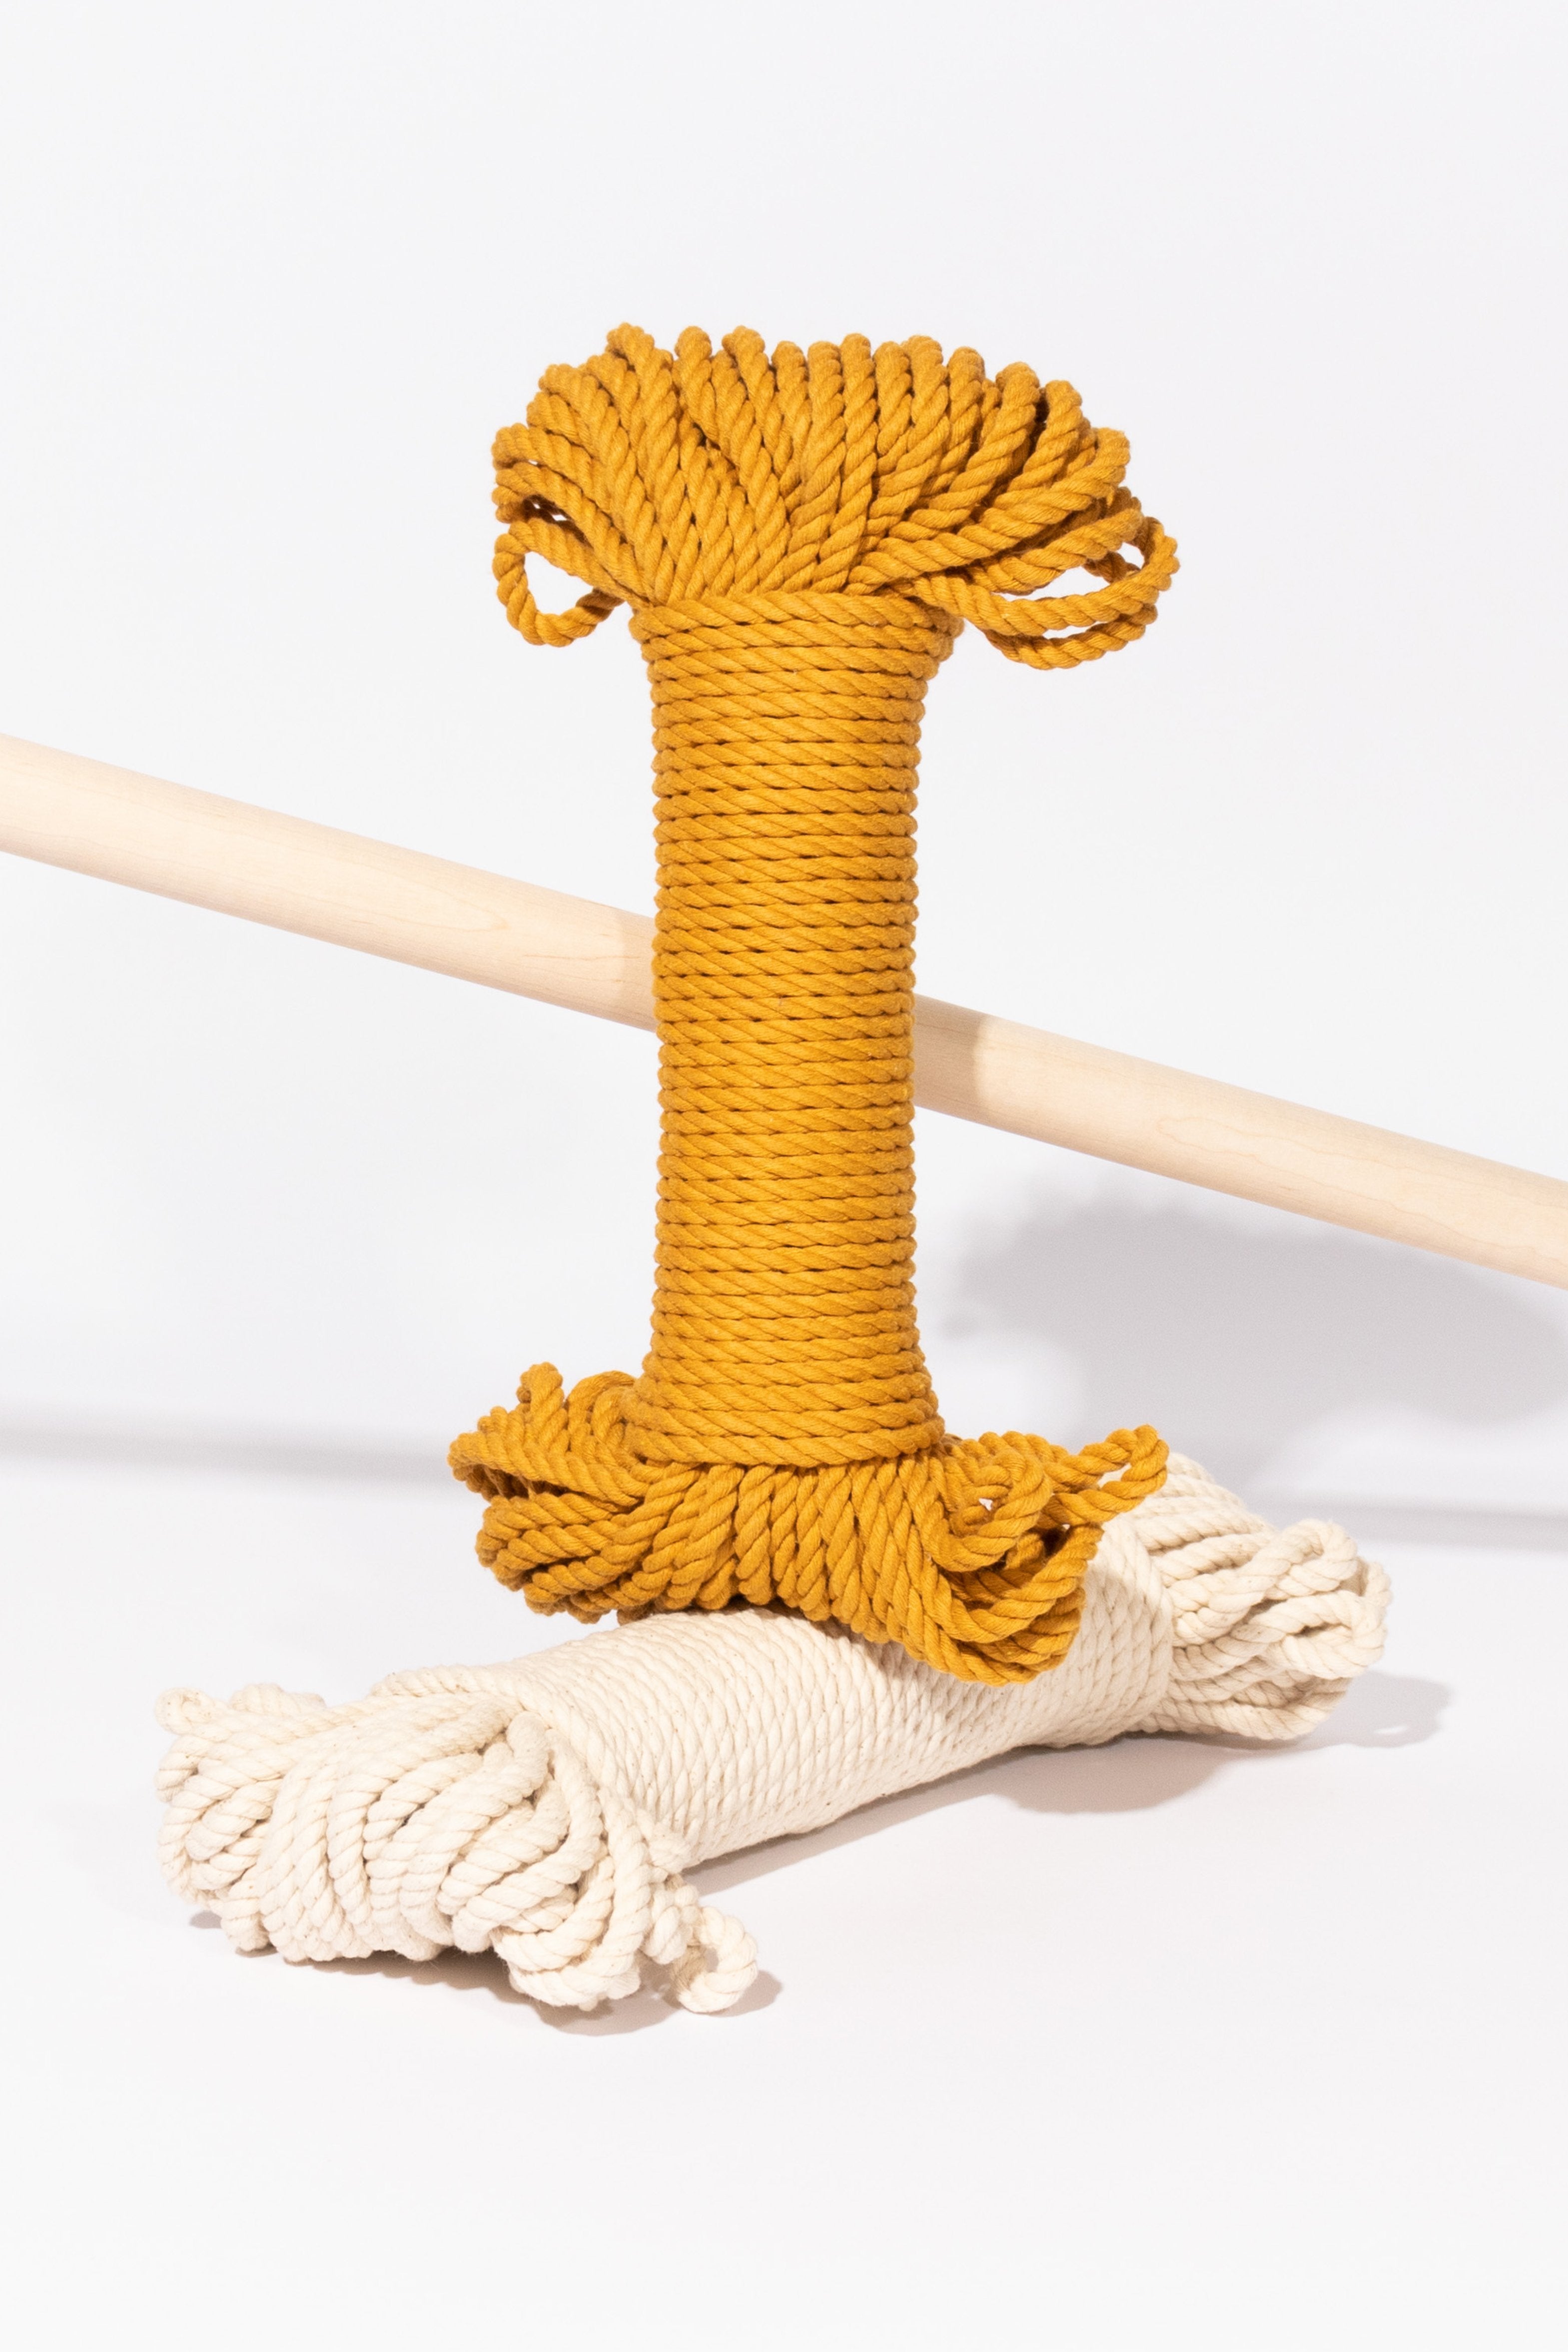 Maine Thread, Twisted Waxed Cord, 70 yard spool, Orange 